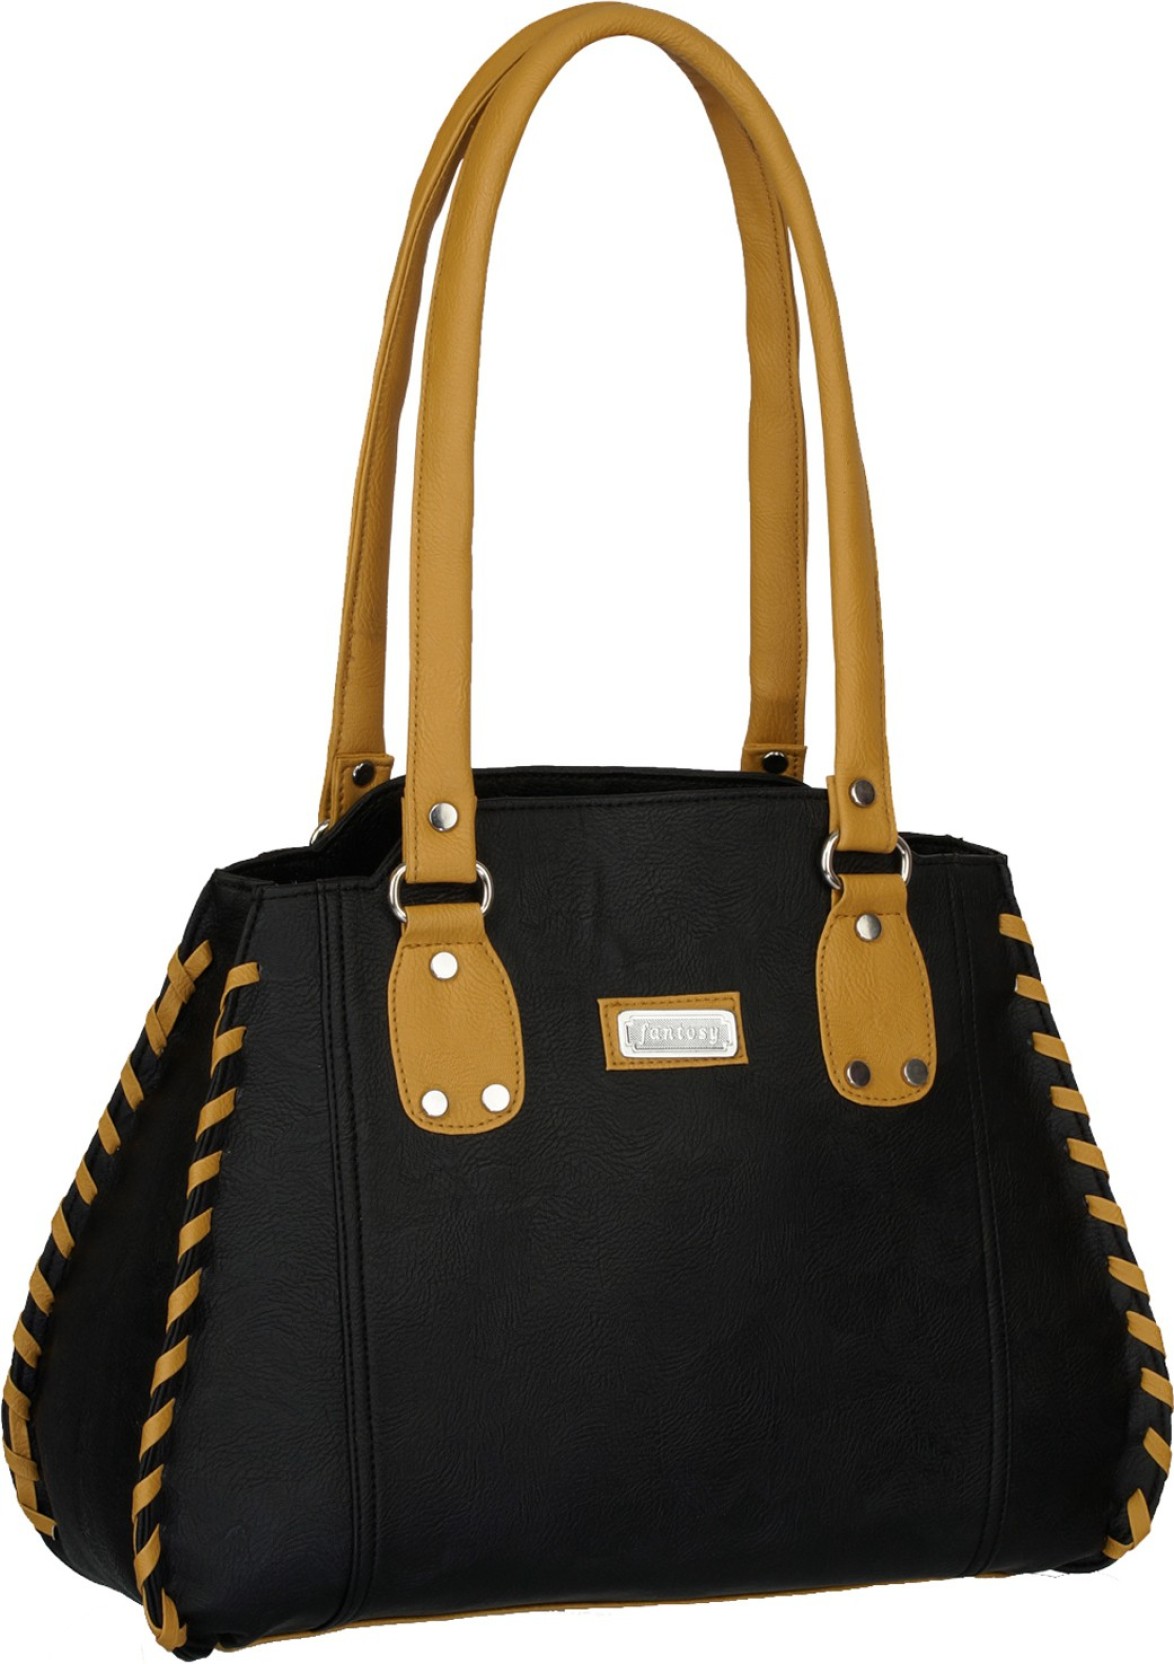 Buy Fantosy Hand-held Bag Black Online @ Best Price in India | www.neverfullmm.com